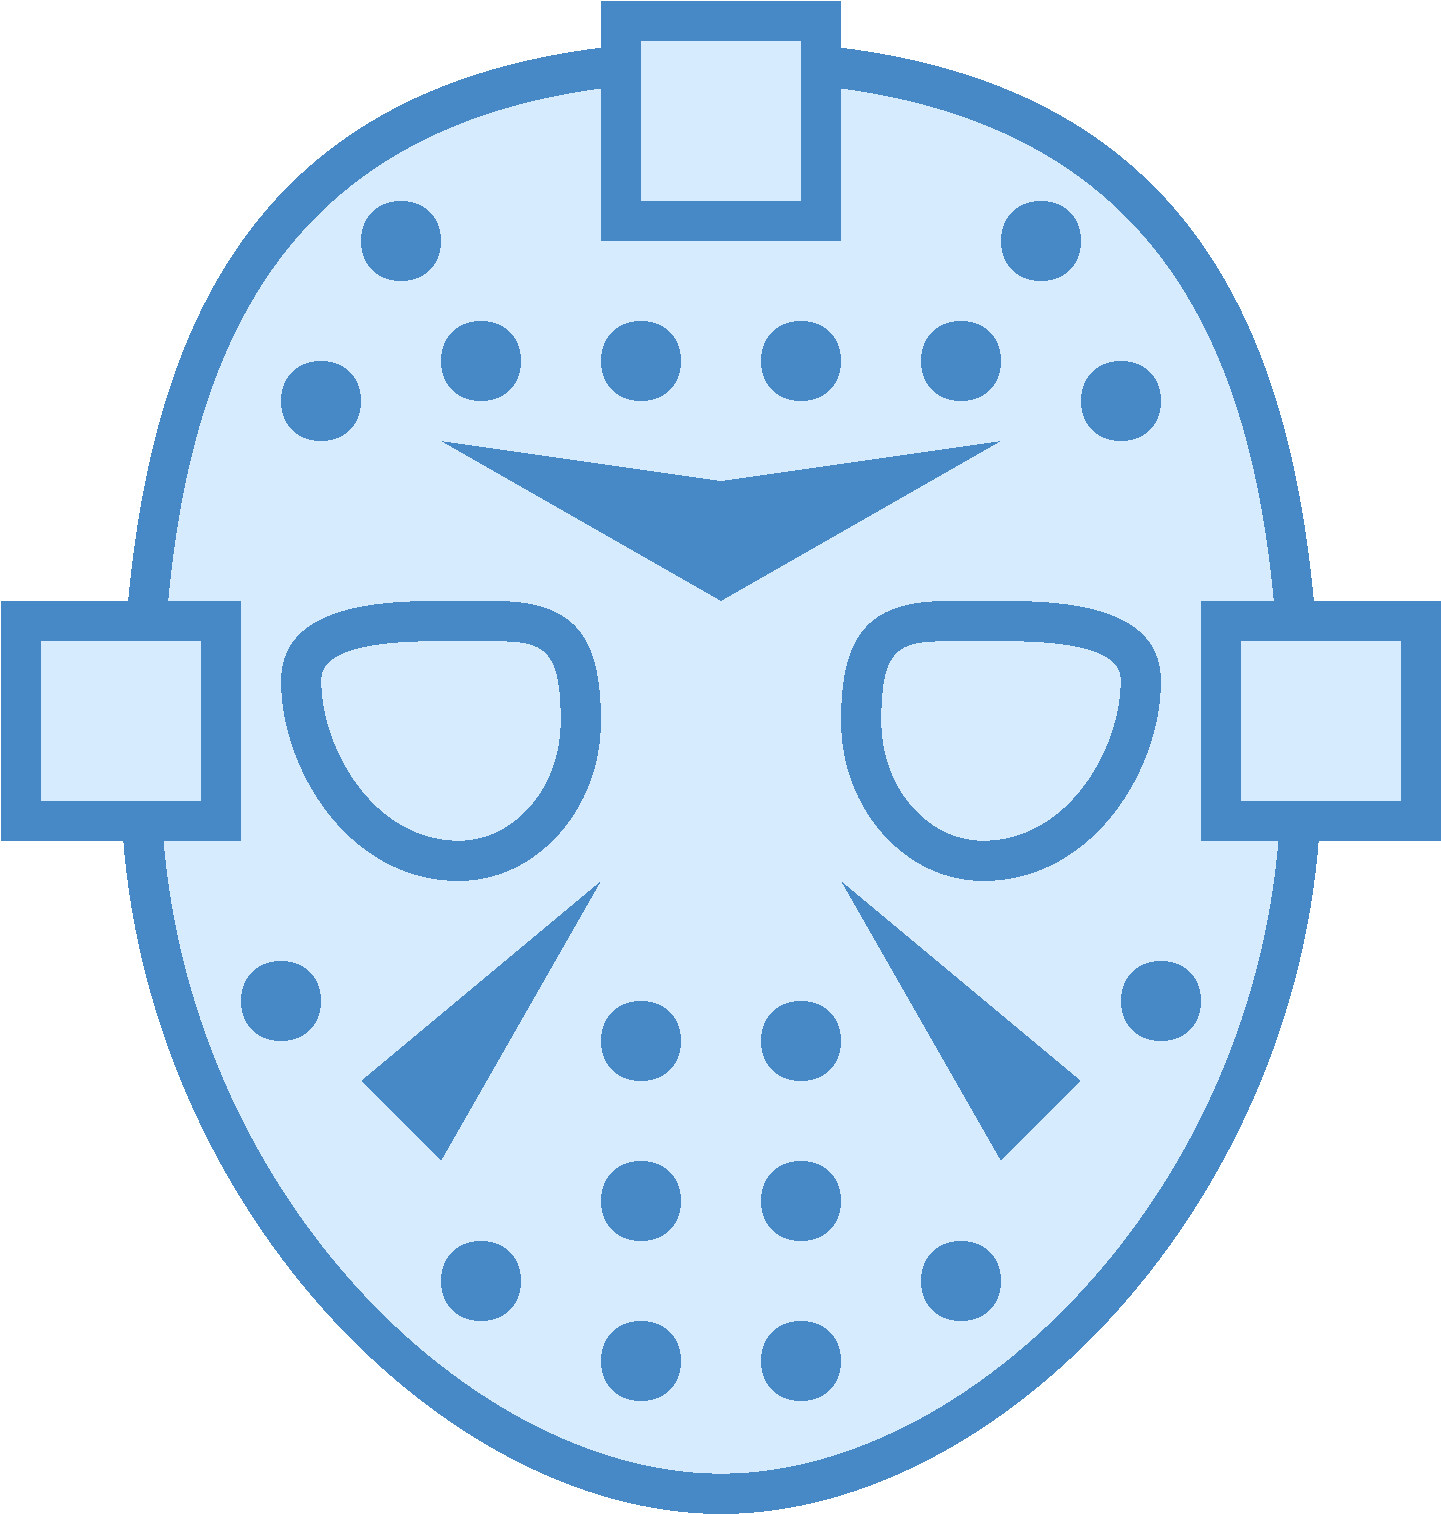 Jason Voorhees Mask Transparant